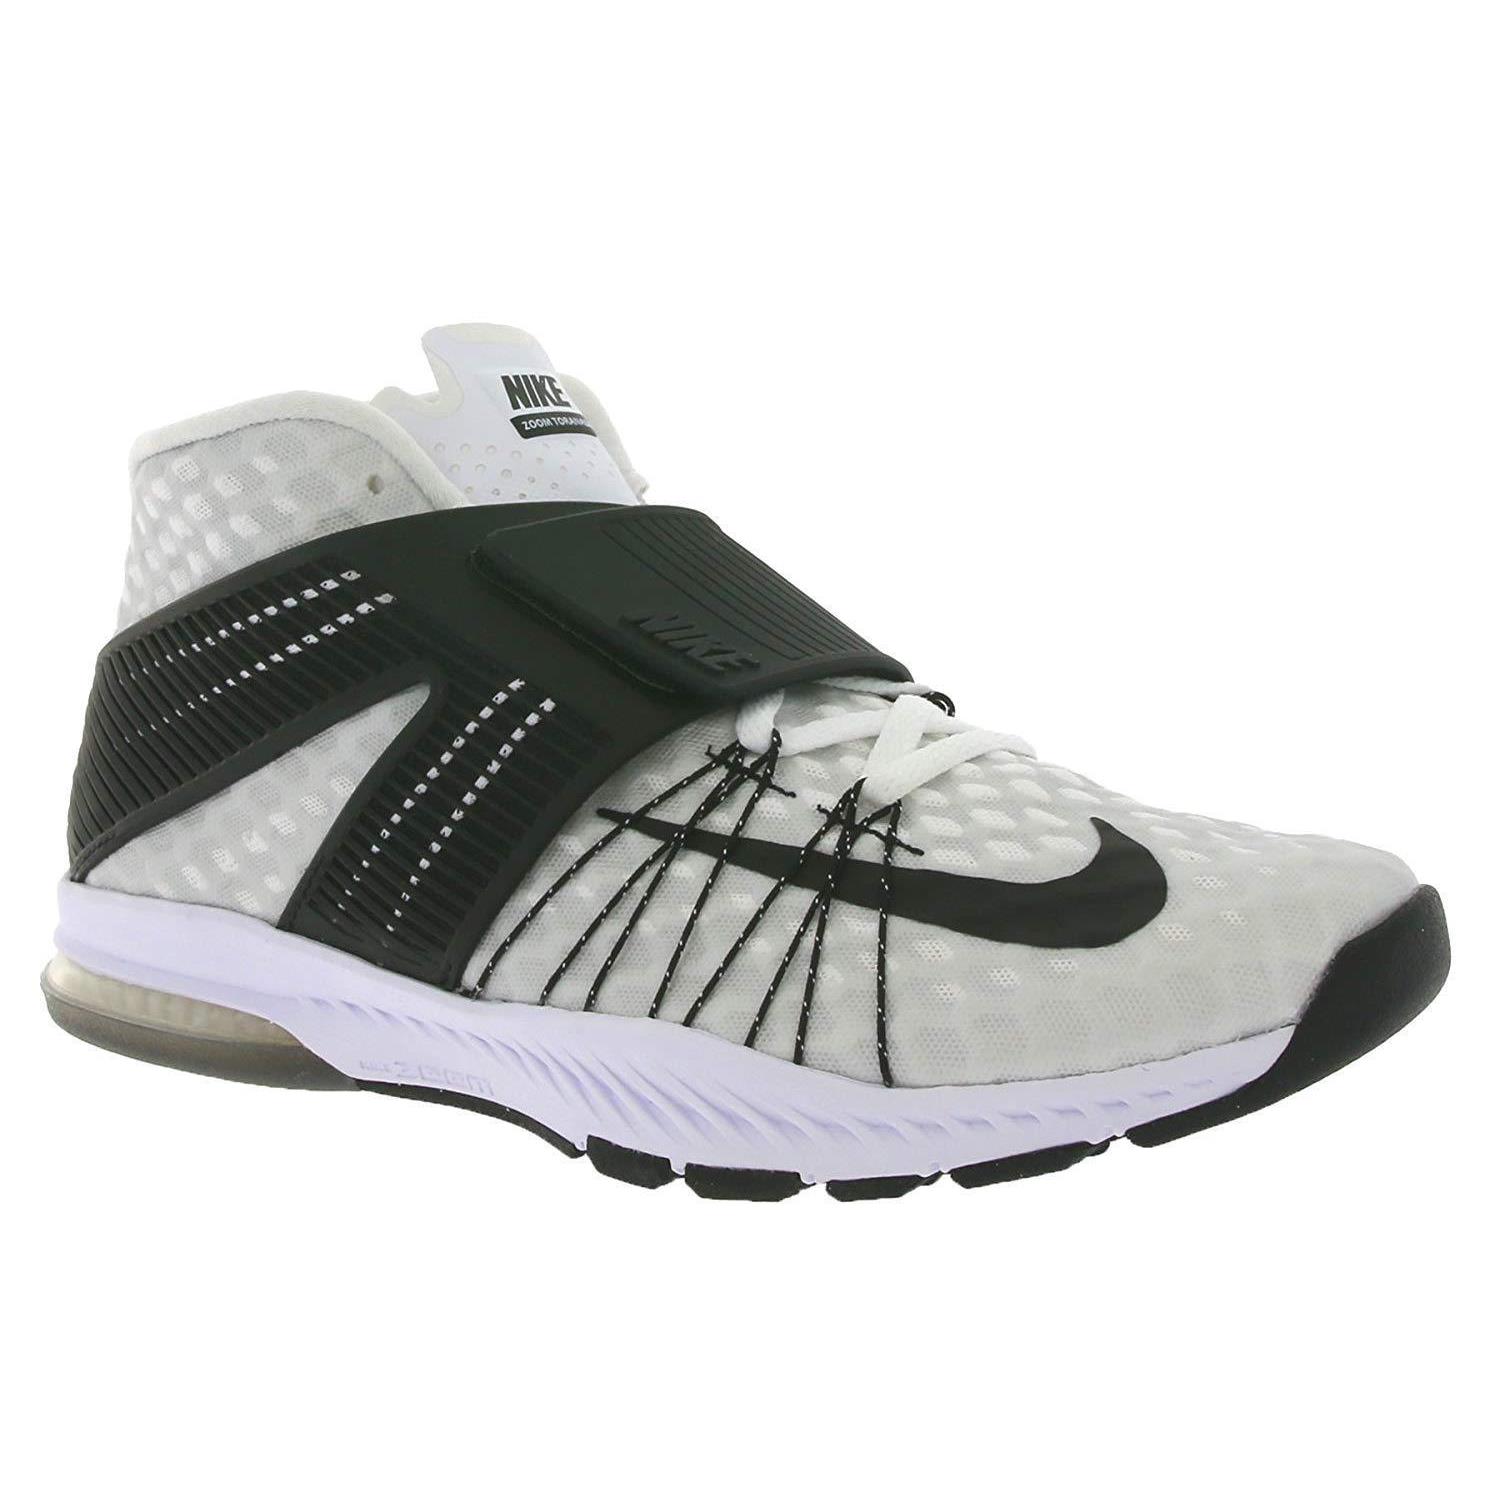 Men`s Nike Zoom Train Toranada Training Shoes 835657 100 Multi Sizes White/blck